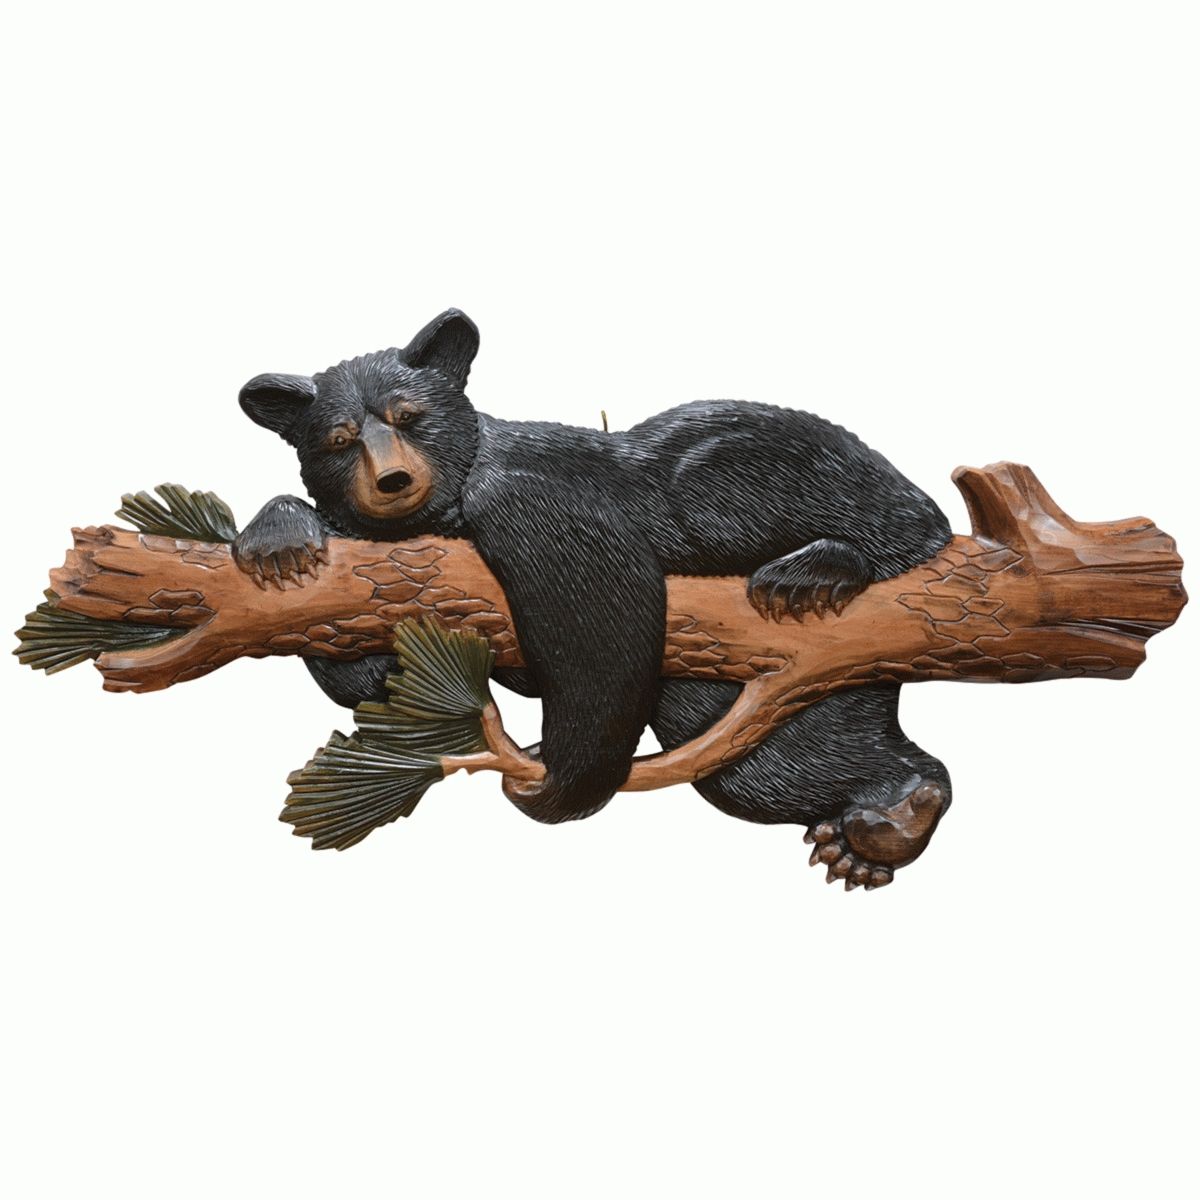 Sleepy Bear Carved Wood Wall Art Inside Best And Newest Wood animal Wall Art (Gallery 19 of 20)